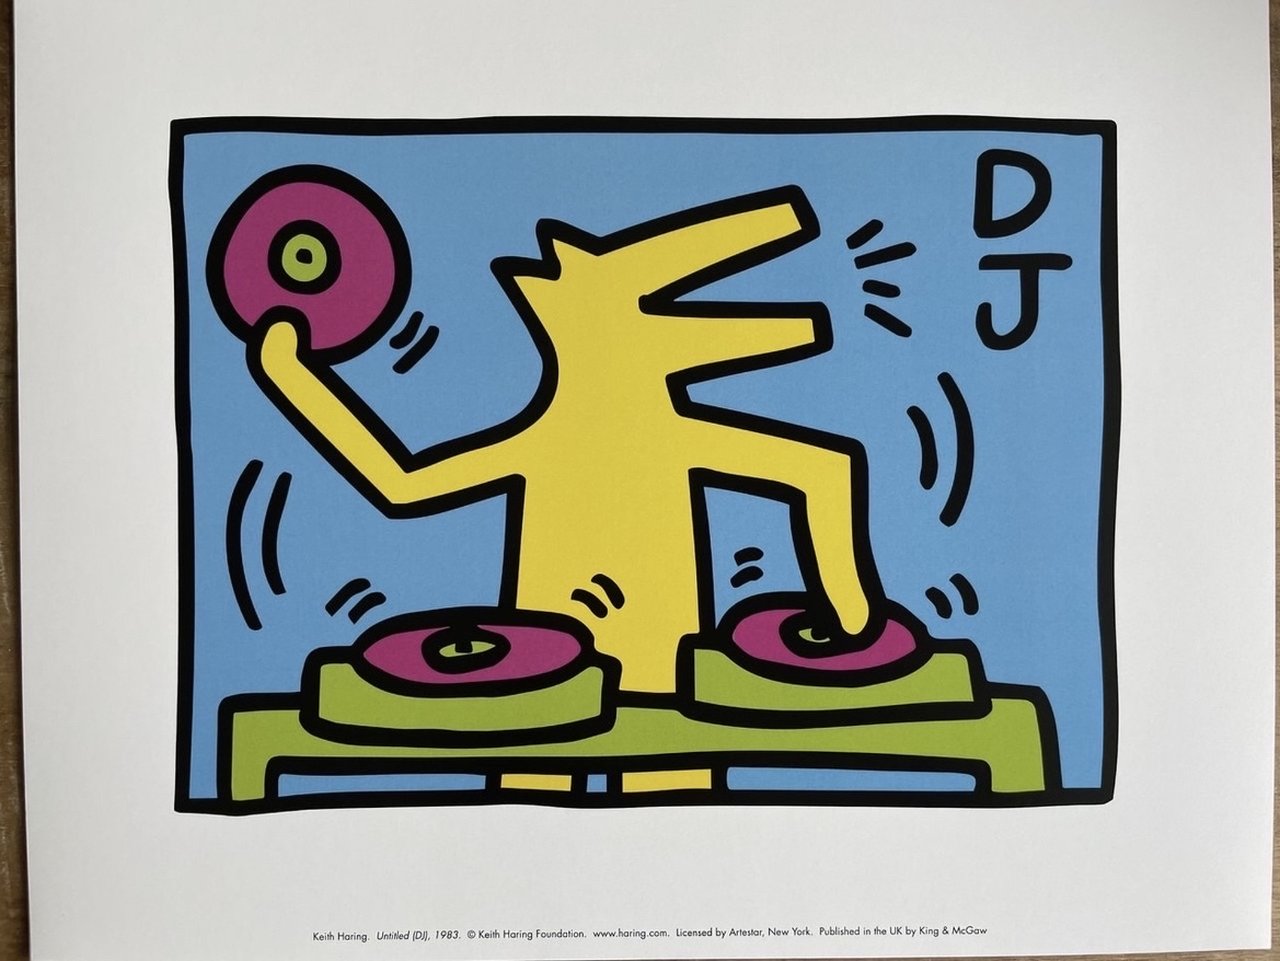 Image 3 of Keith Haring (naar) - Untitled (DJ), 1983, onder licentie van Artestar NY, gedrukt in het VK